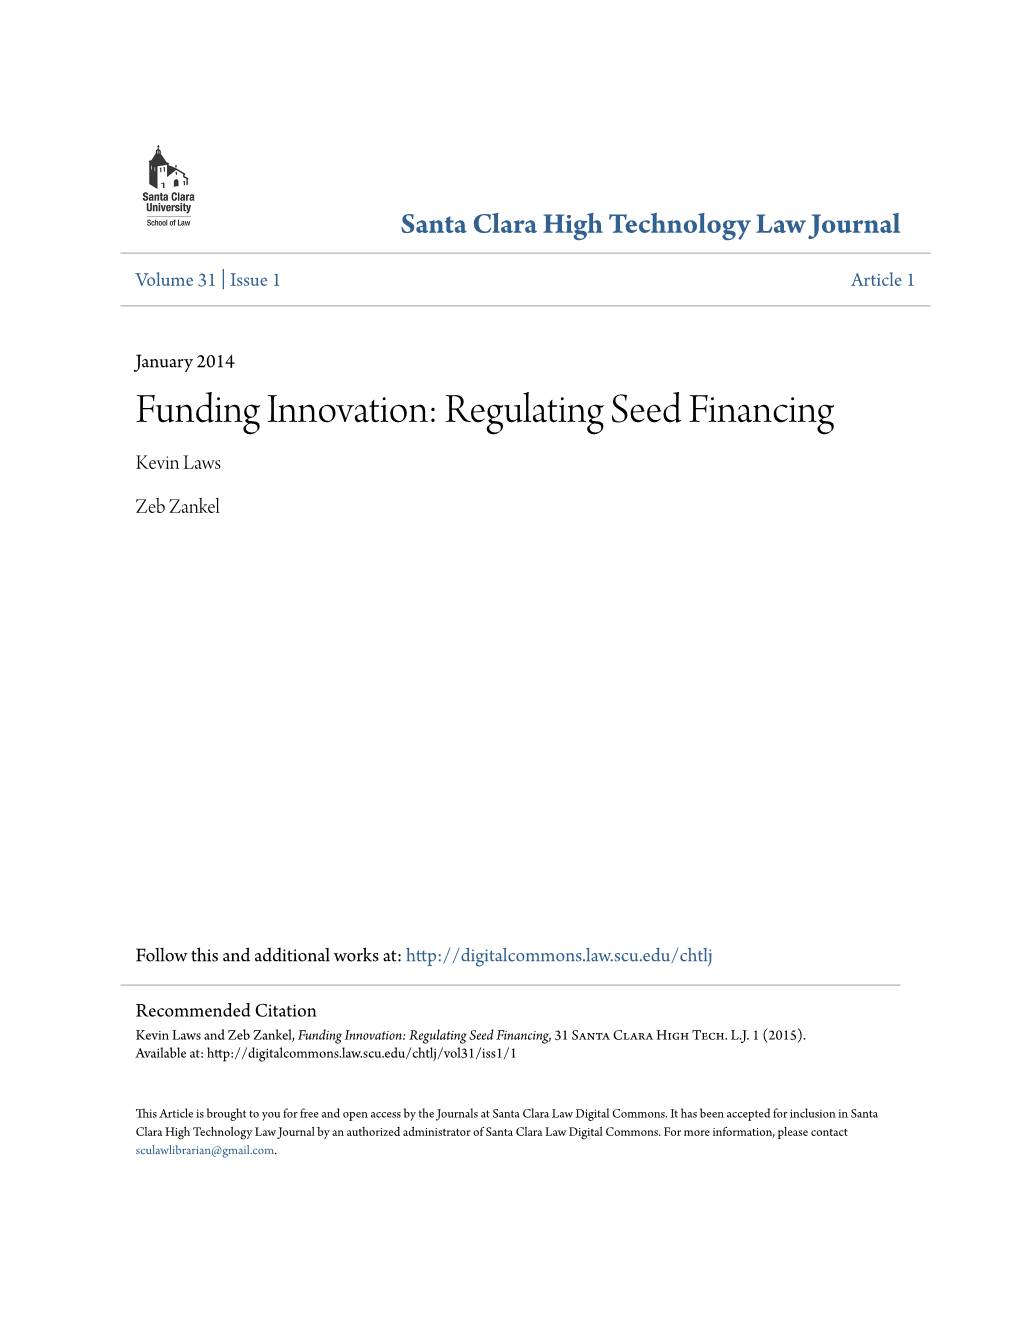 Funding Innovation: Regulating Seed Financing Kevin Laws